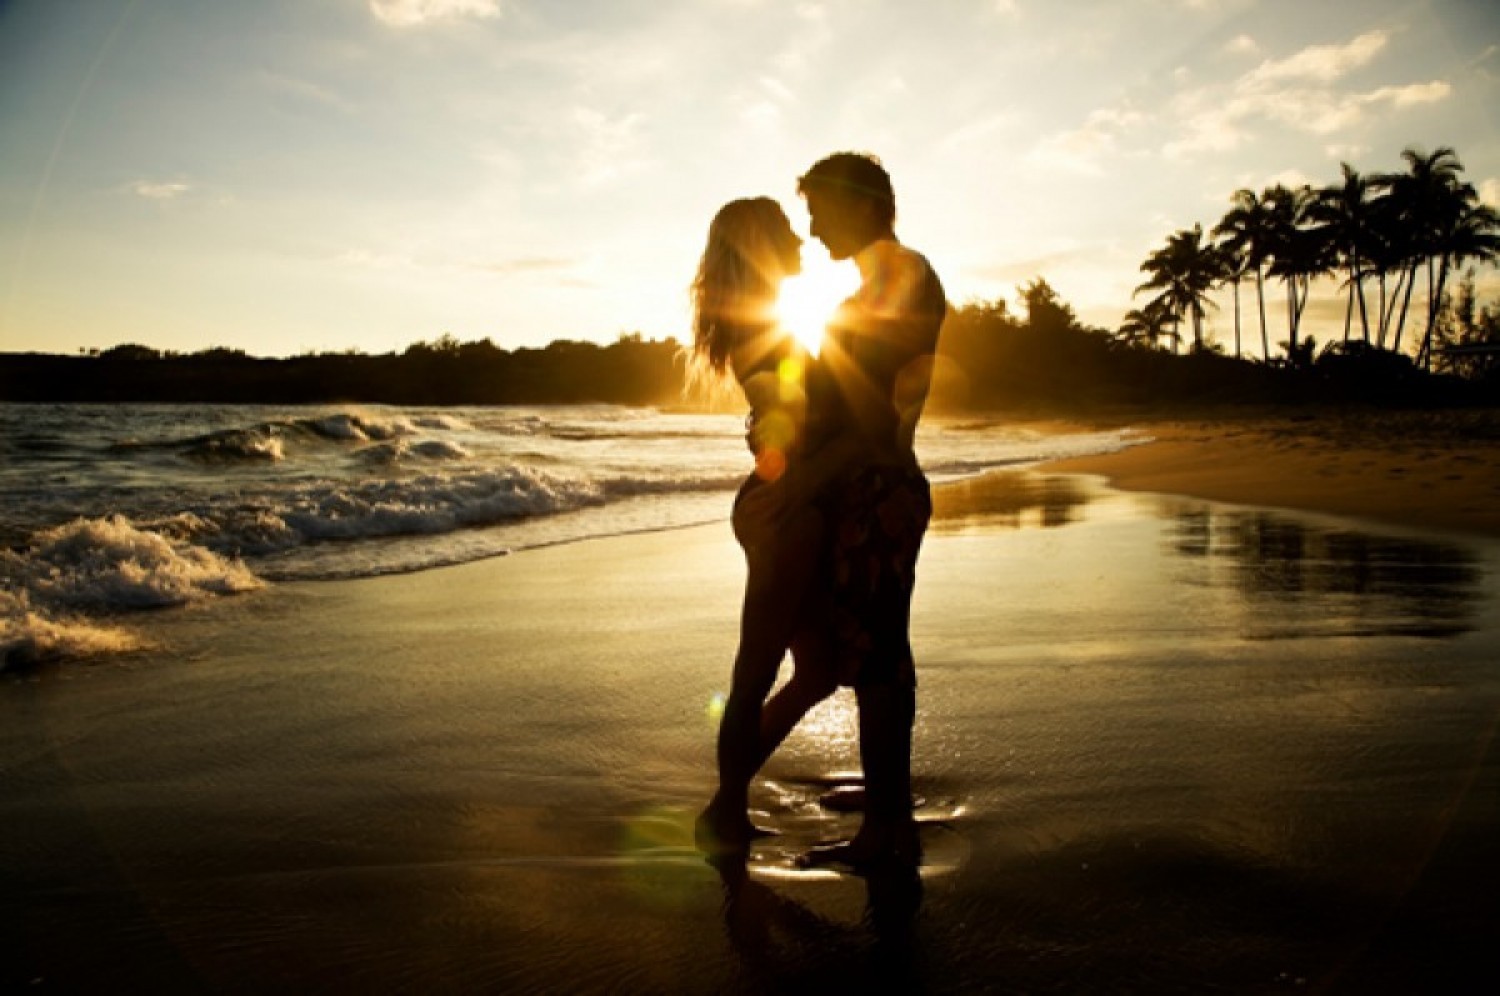 http://1.bp.blogspot.com/-yVCtBywOA24/UD4DzoyFVqI/AAAAAAAAA1o/Yg1rynzoCZk/s1600/love-couple-beach-kiss-kissing-hot+couple+in+sun+shine-love+images+download-romantic+love+images+download-lonelyness-alone-www.143loveu.blogspot.in.jpg